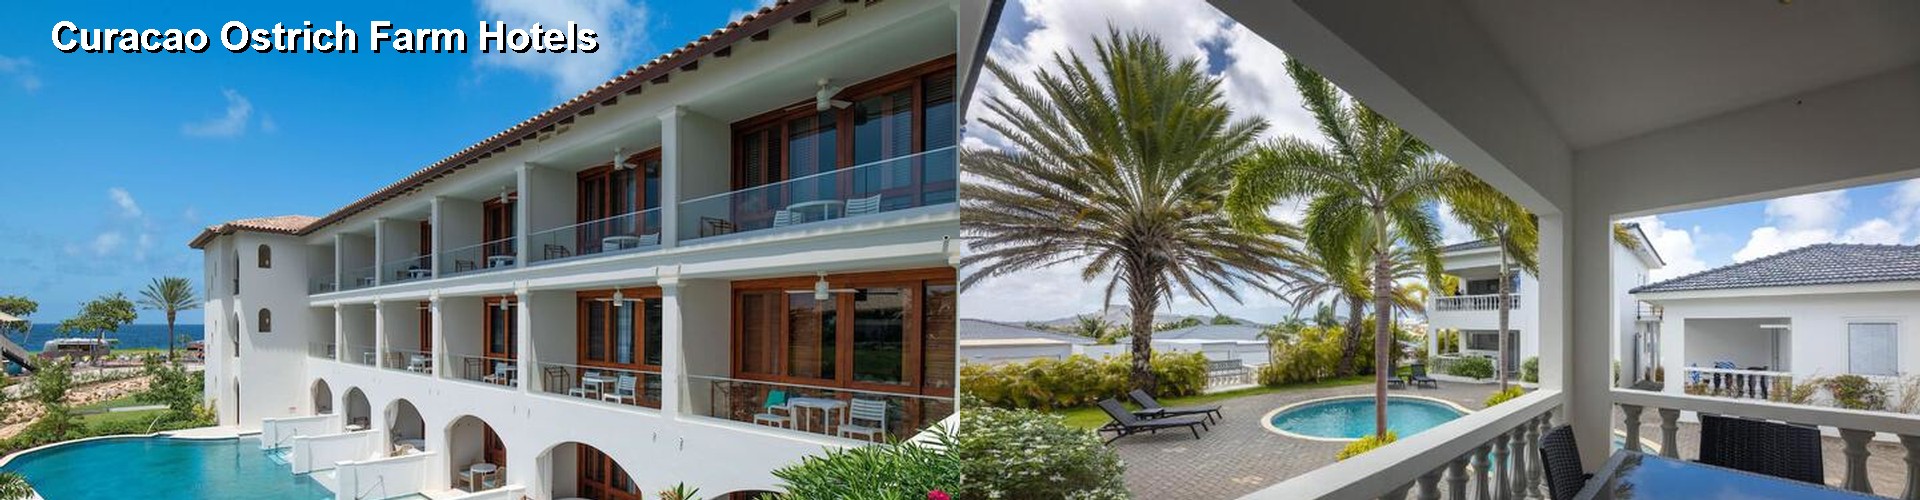 5 Best Hotels near Curacao Ostrich Farm